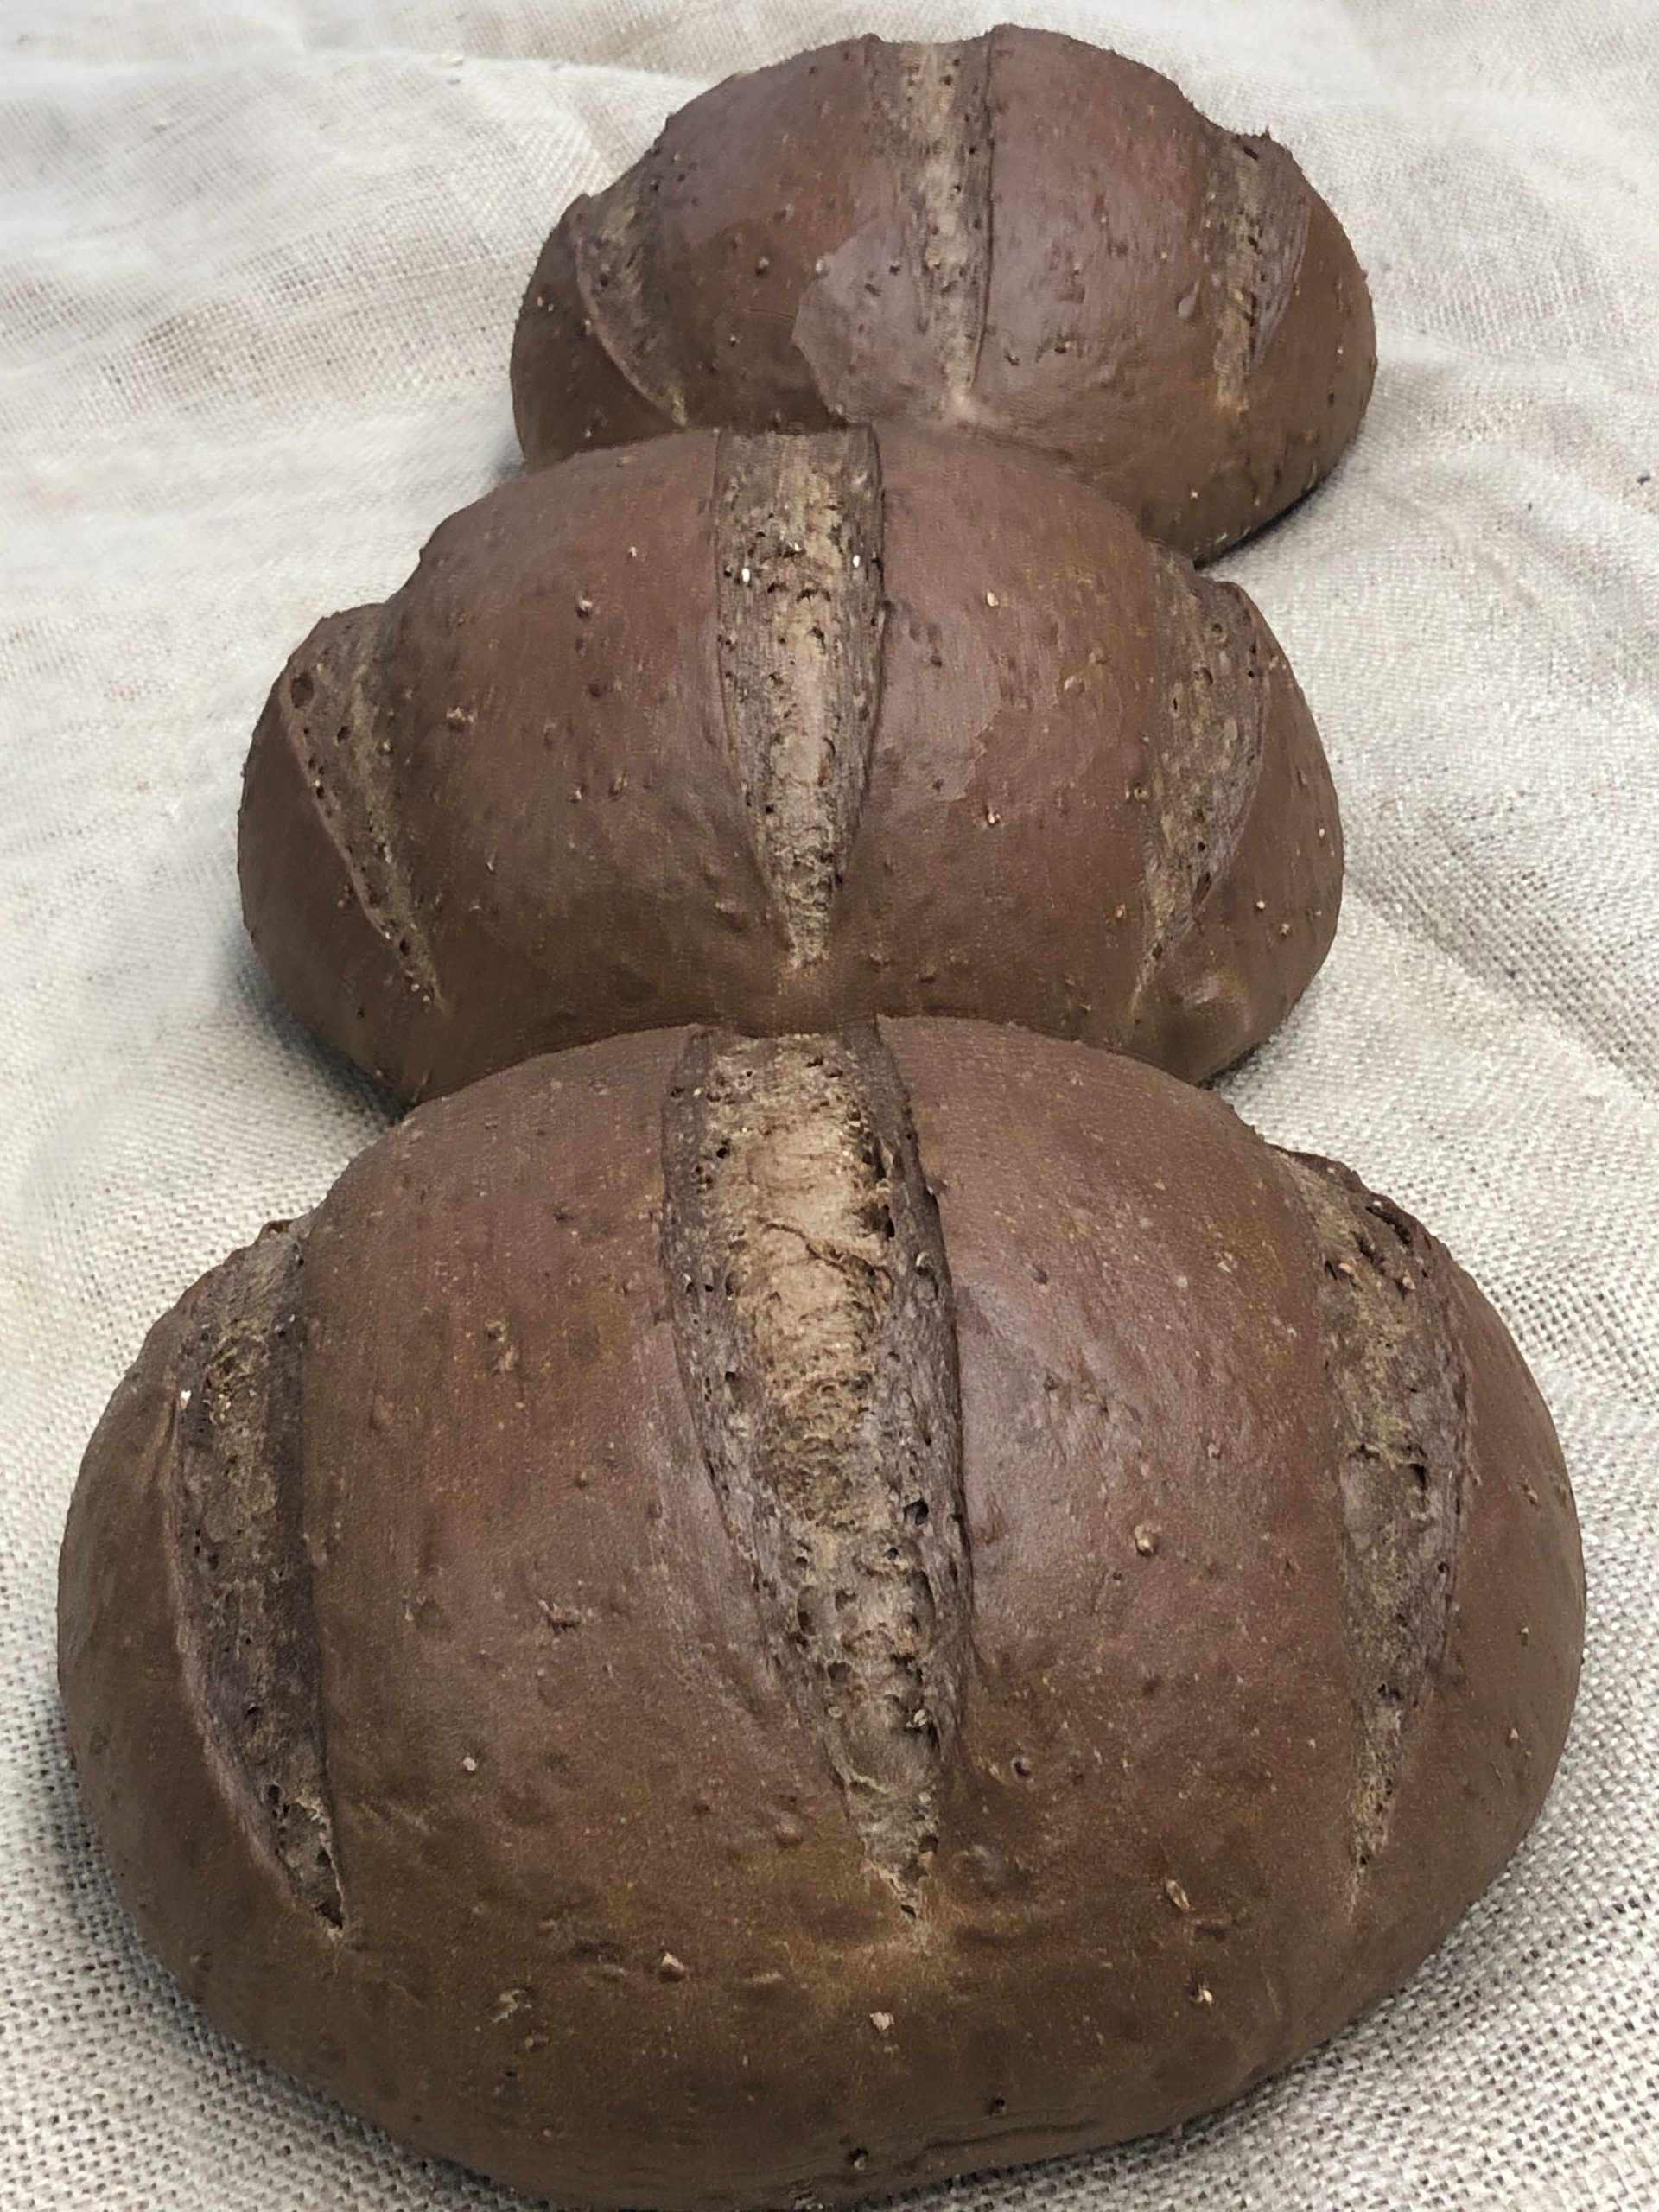 Sourdough Pumpernickel Dark Rye Bread Recipe With Molasses